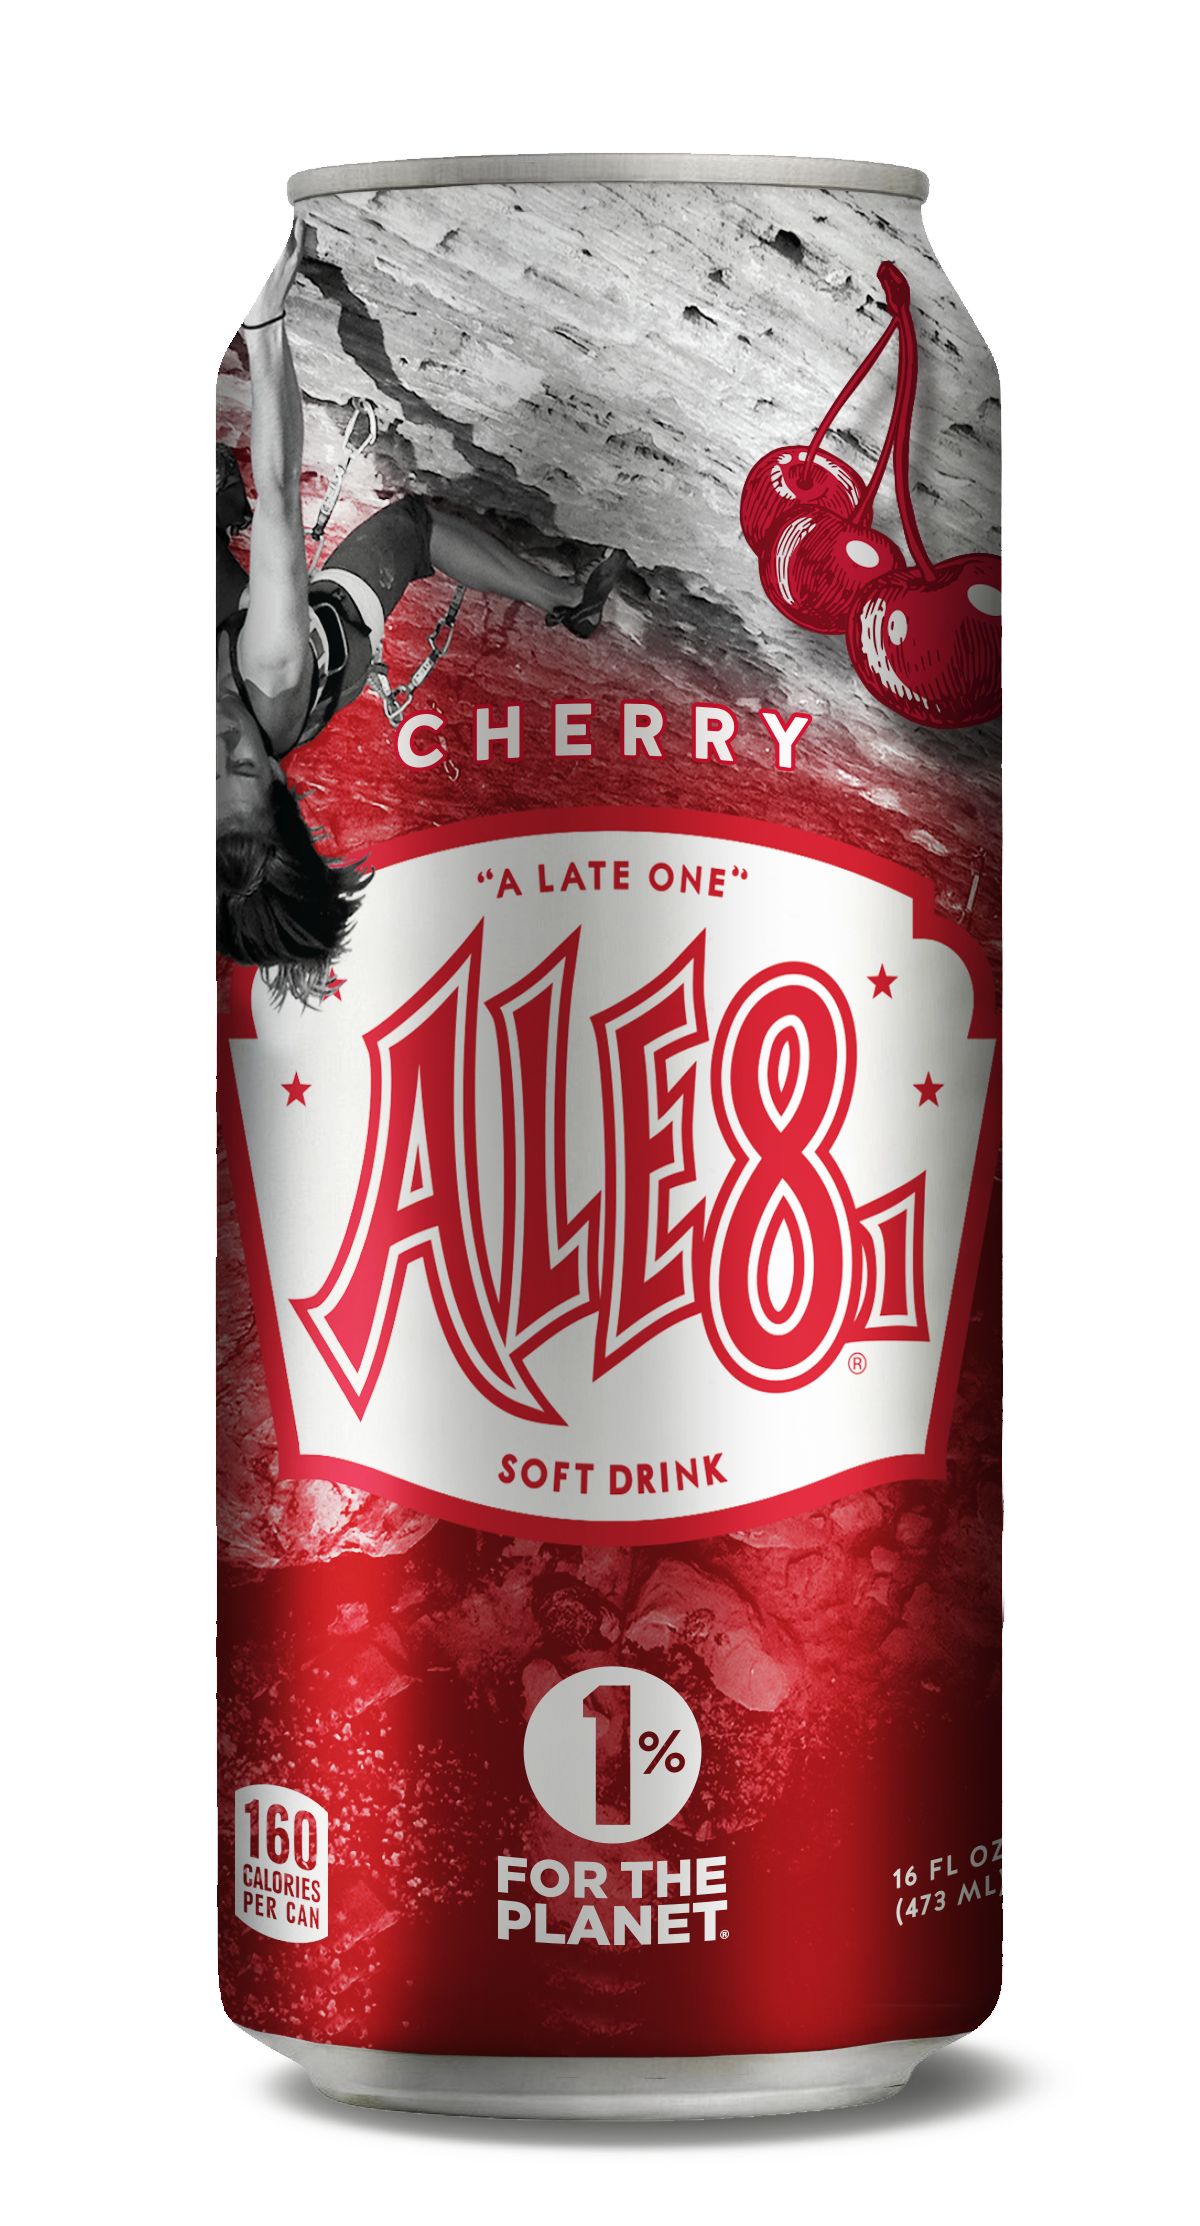 Ale-8-One Cherry Soda, 16 Fl. Oz. - Walmart.com - Walmart.com